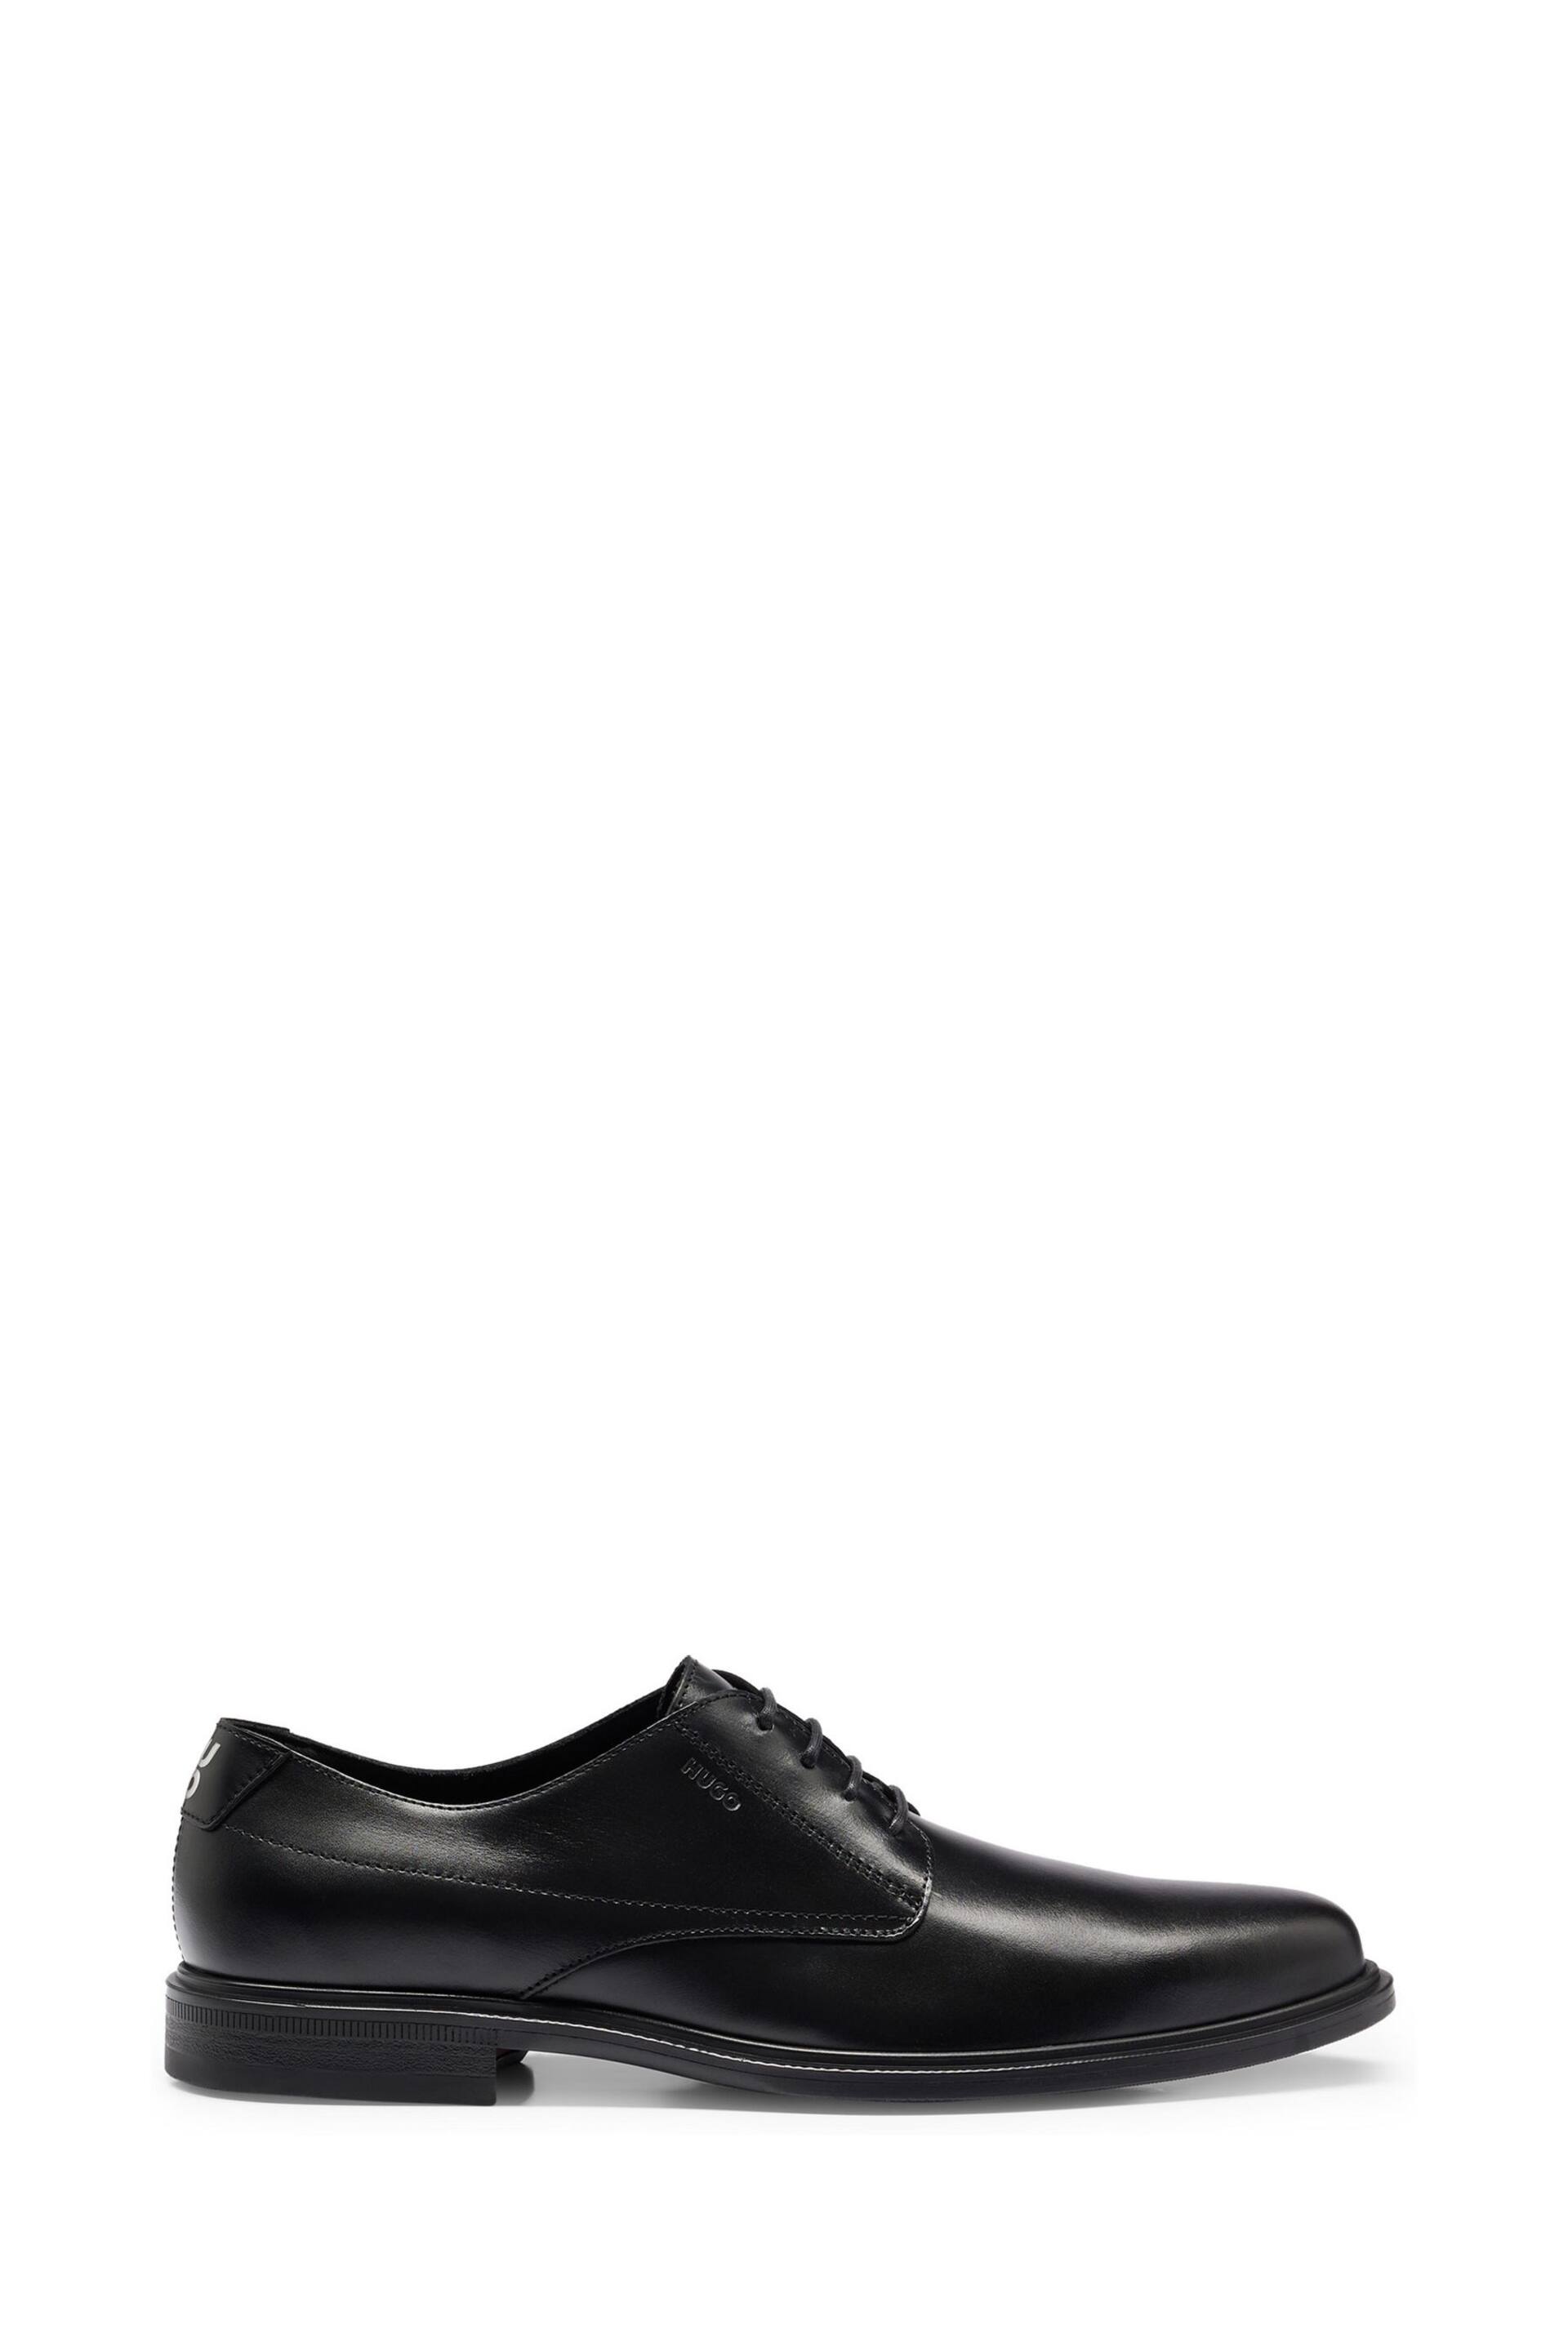 HUGO Kerr Black Shoes - Image 1 of 5